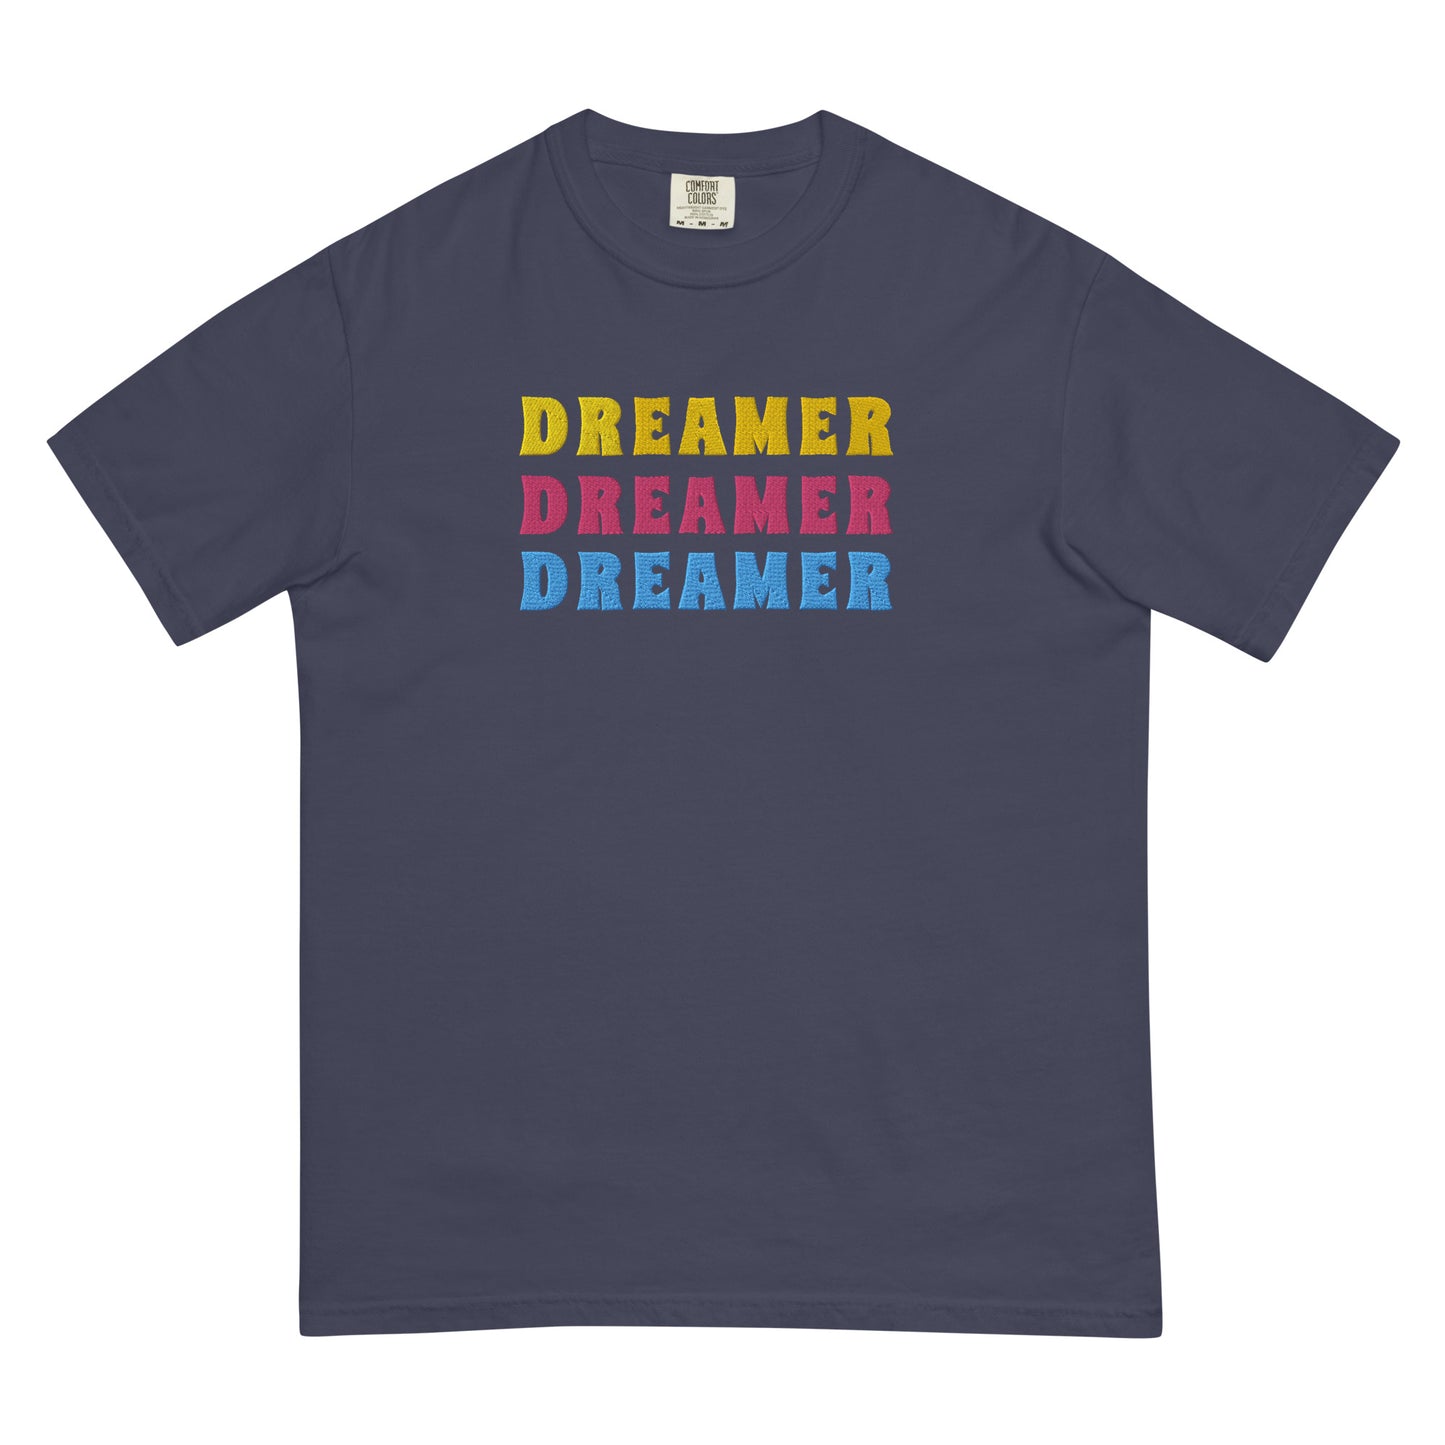 "DREAMER DREAMER DREAMER" Embroidered Heavyweight T-shirt